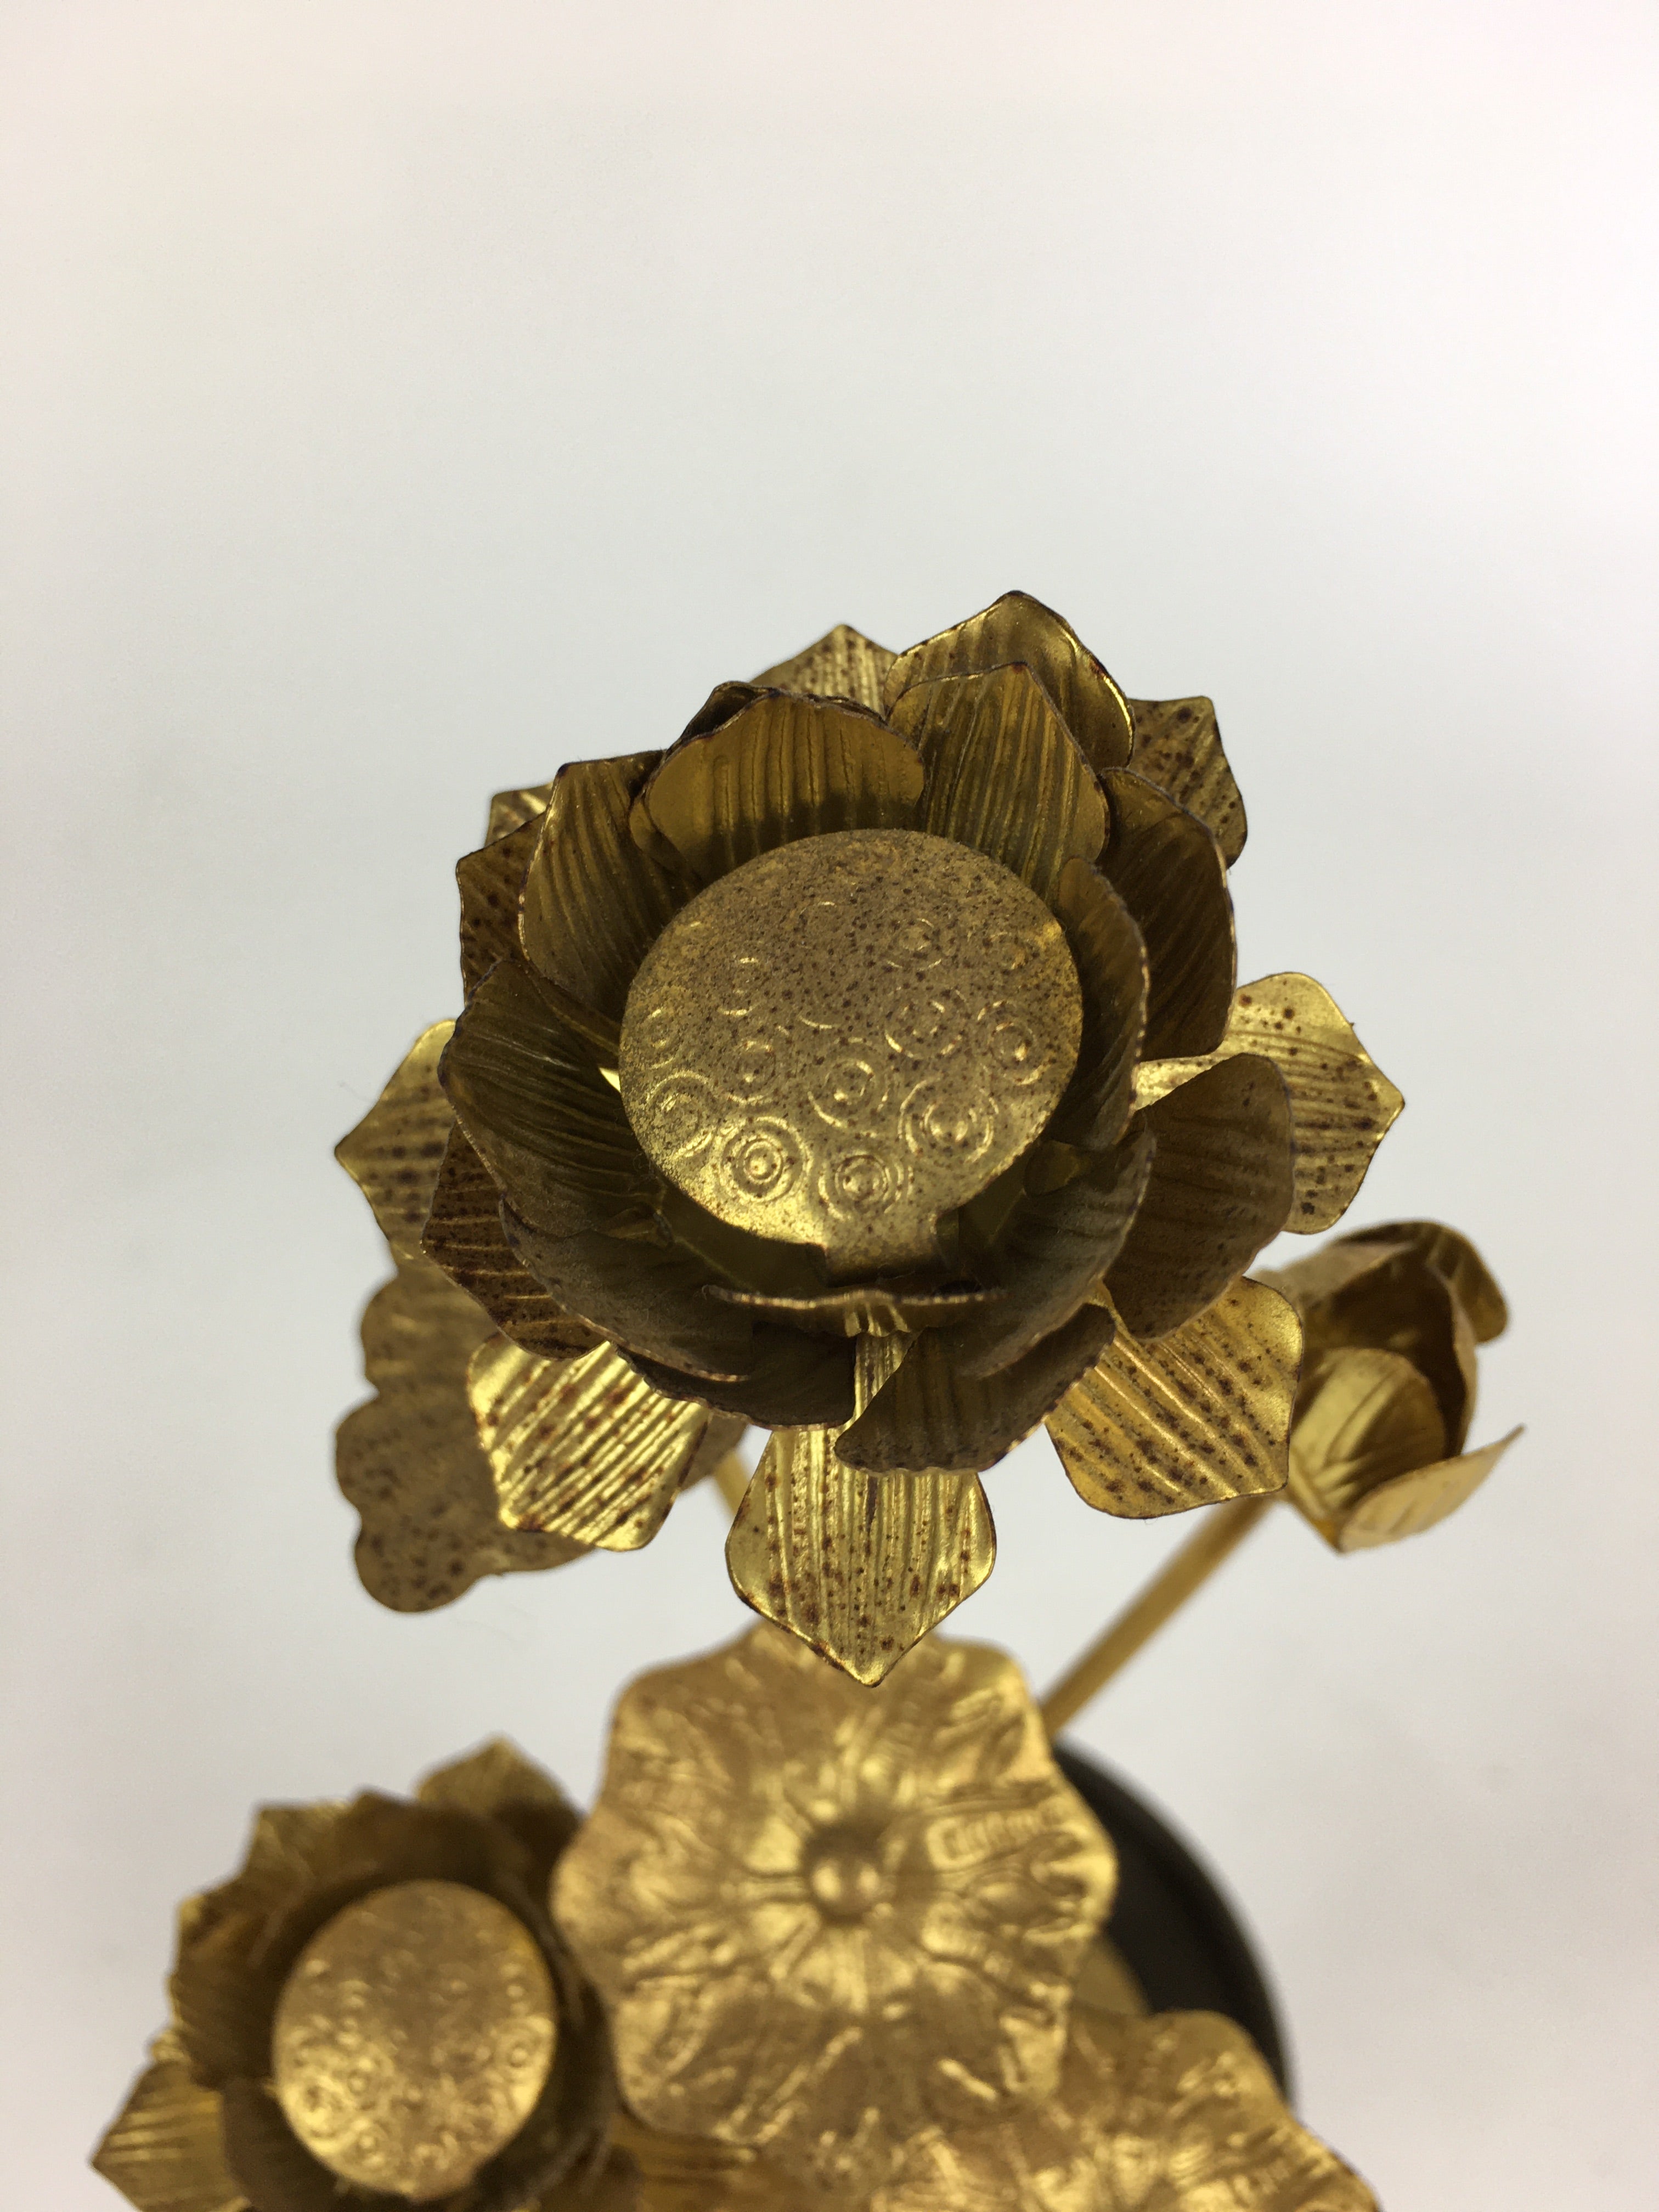 Japanese Buddhist Altar Fitting Artificial Flower Bouquet 2pc Set Vtg, Online Shop